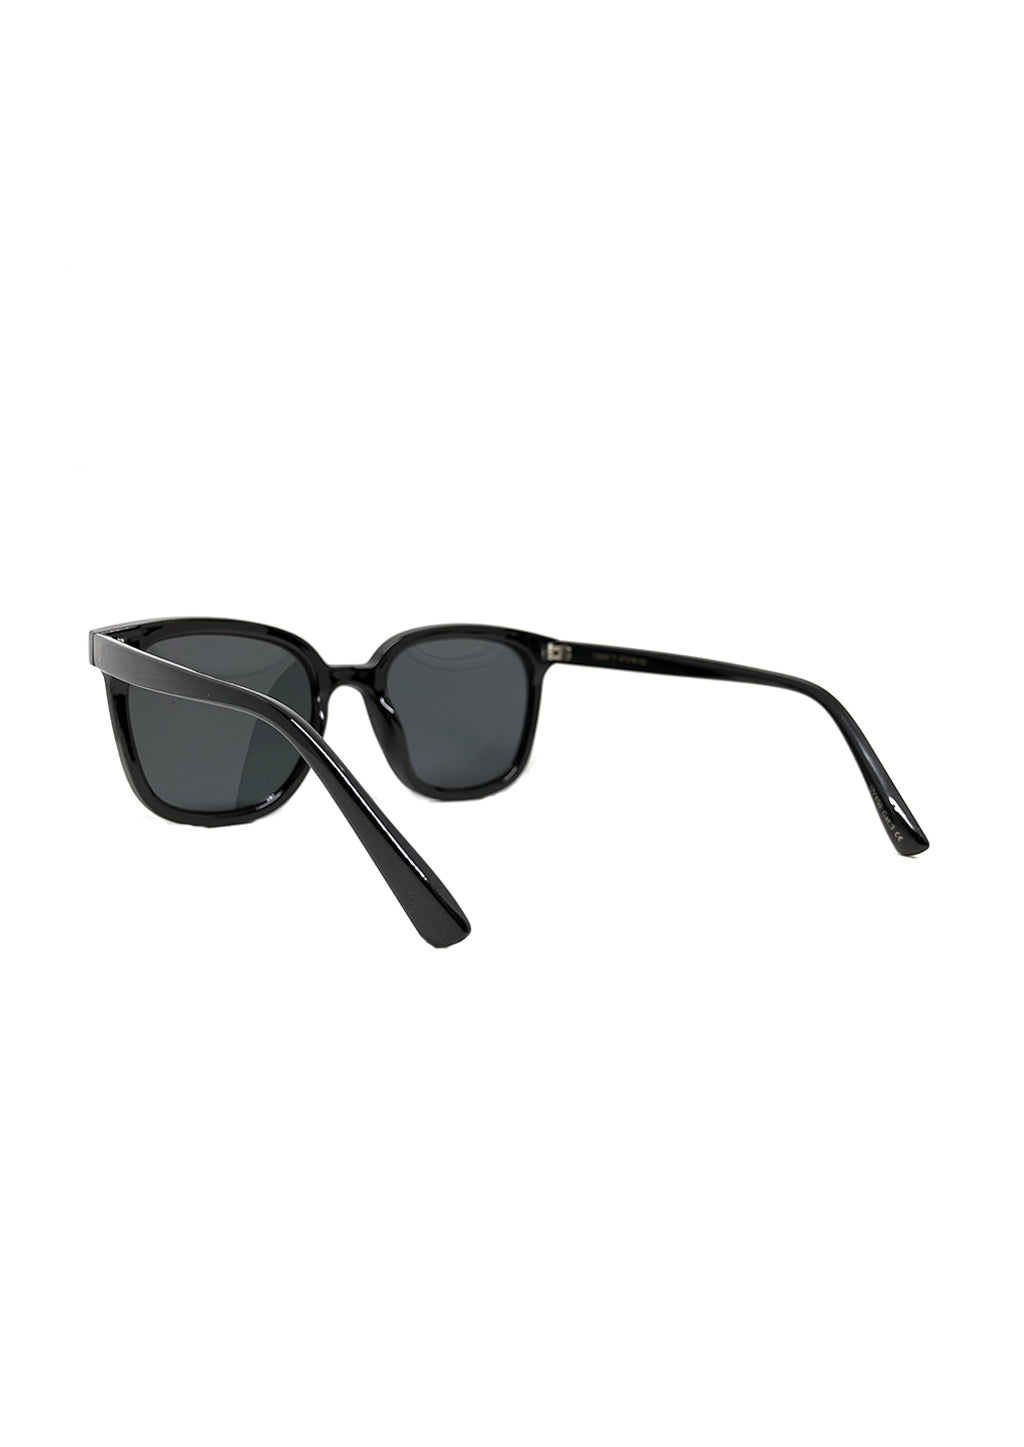 Iris Wayfarer sunglasses - Details